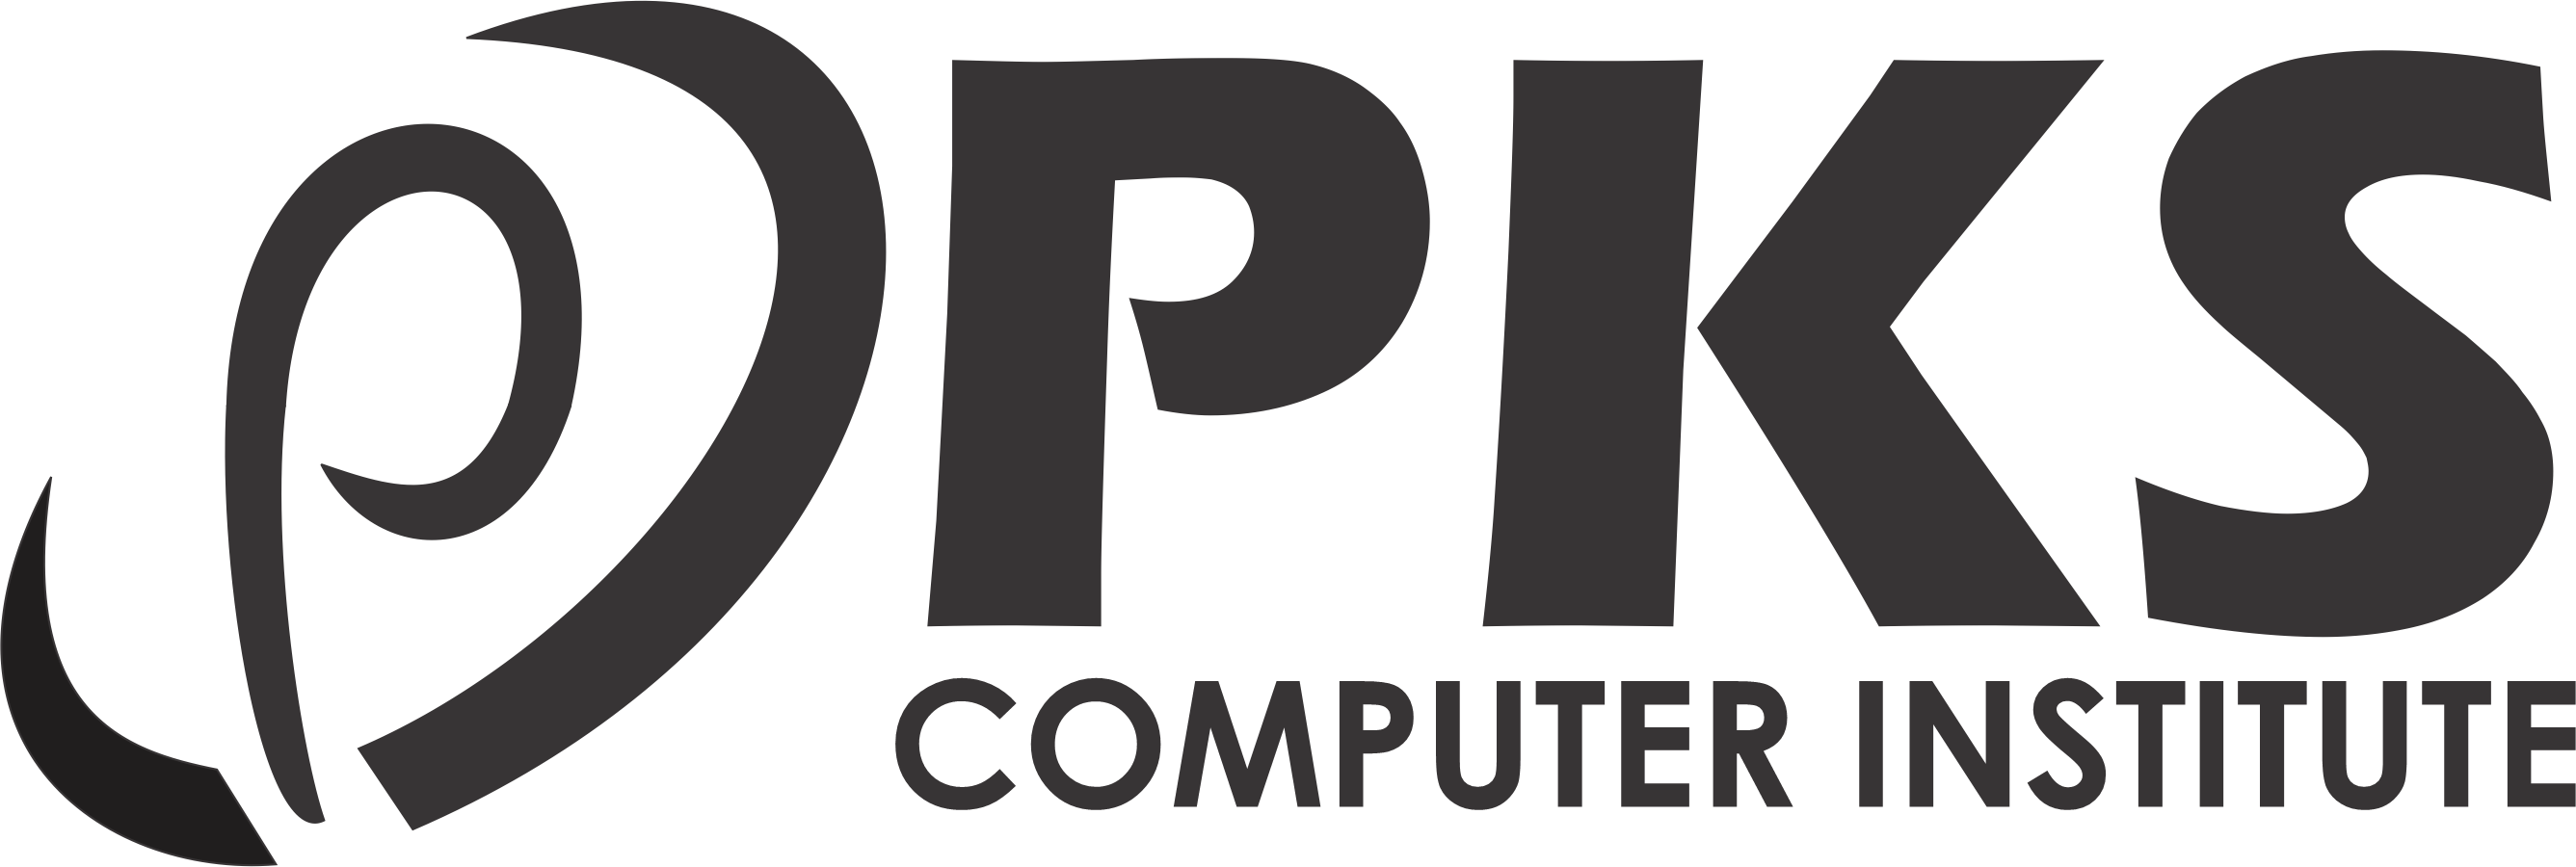 PKS COMPUTER CENTER